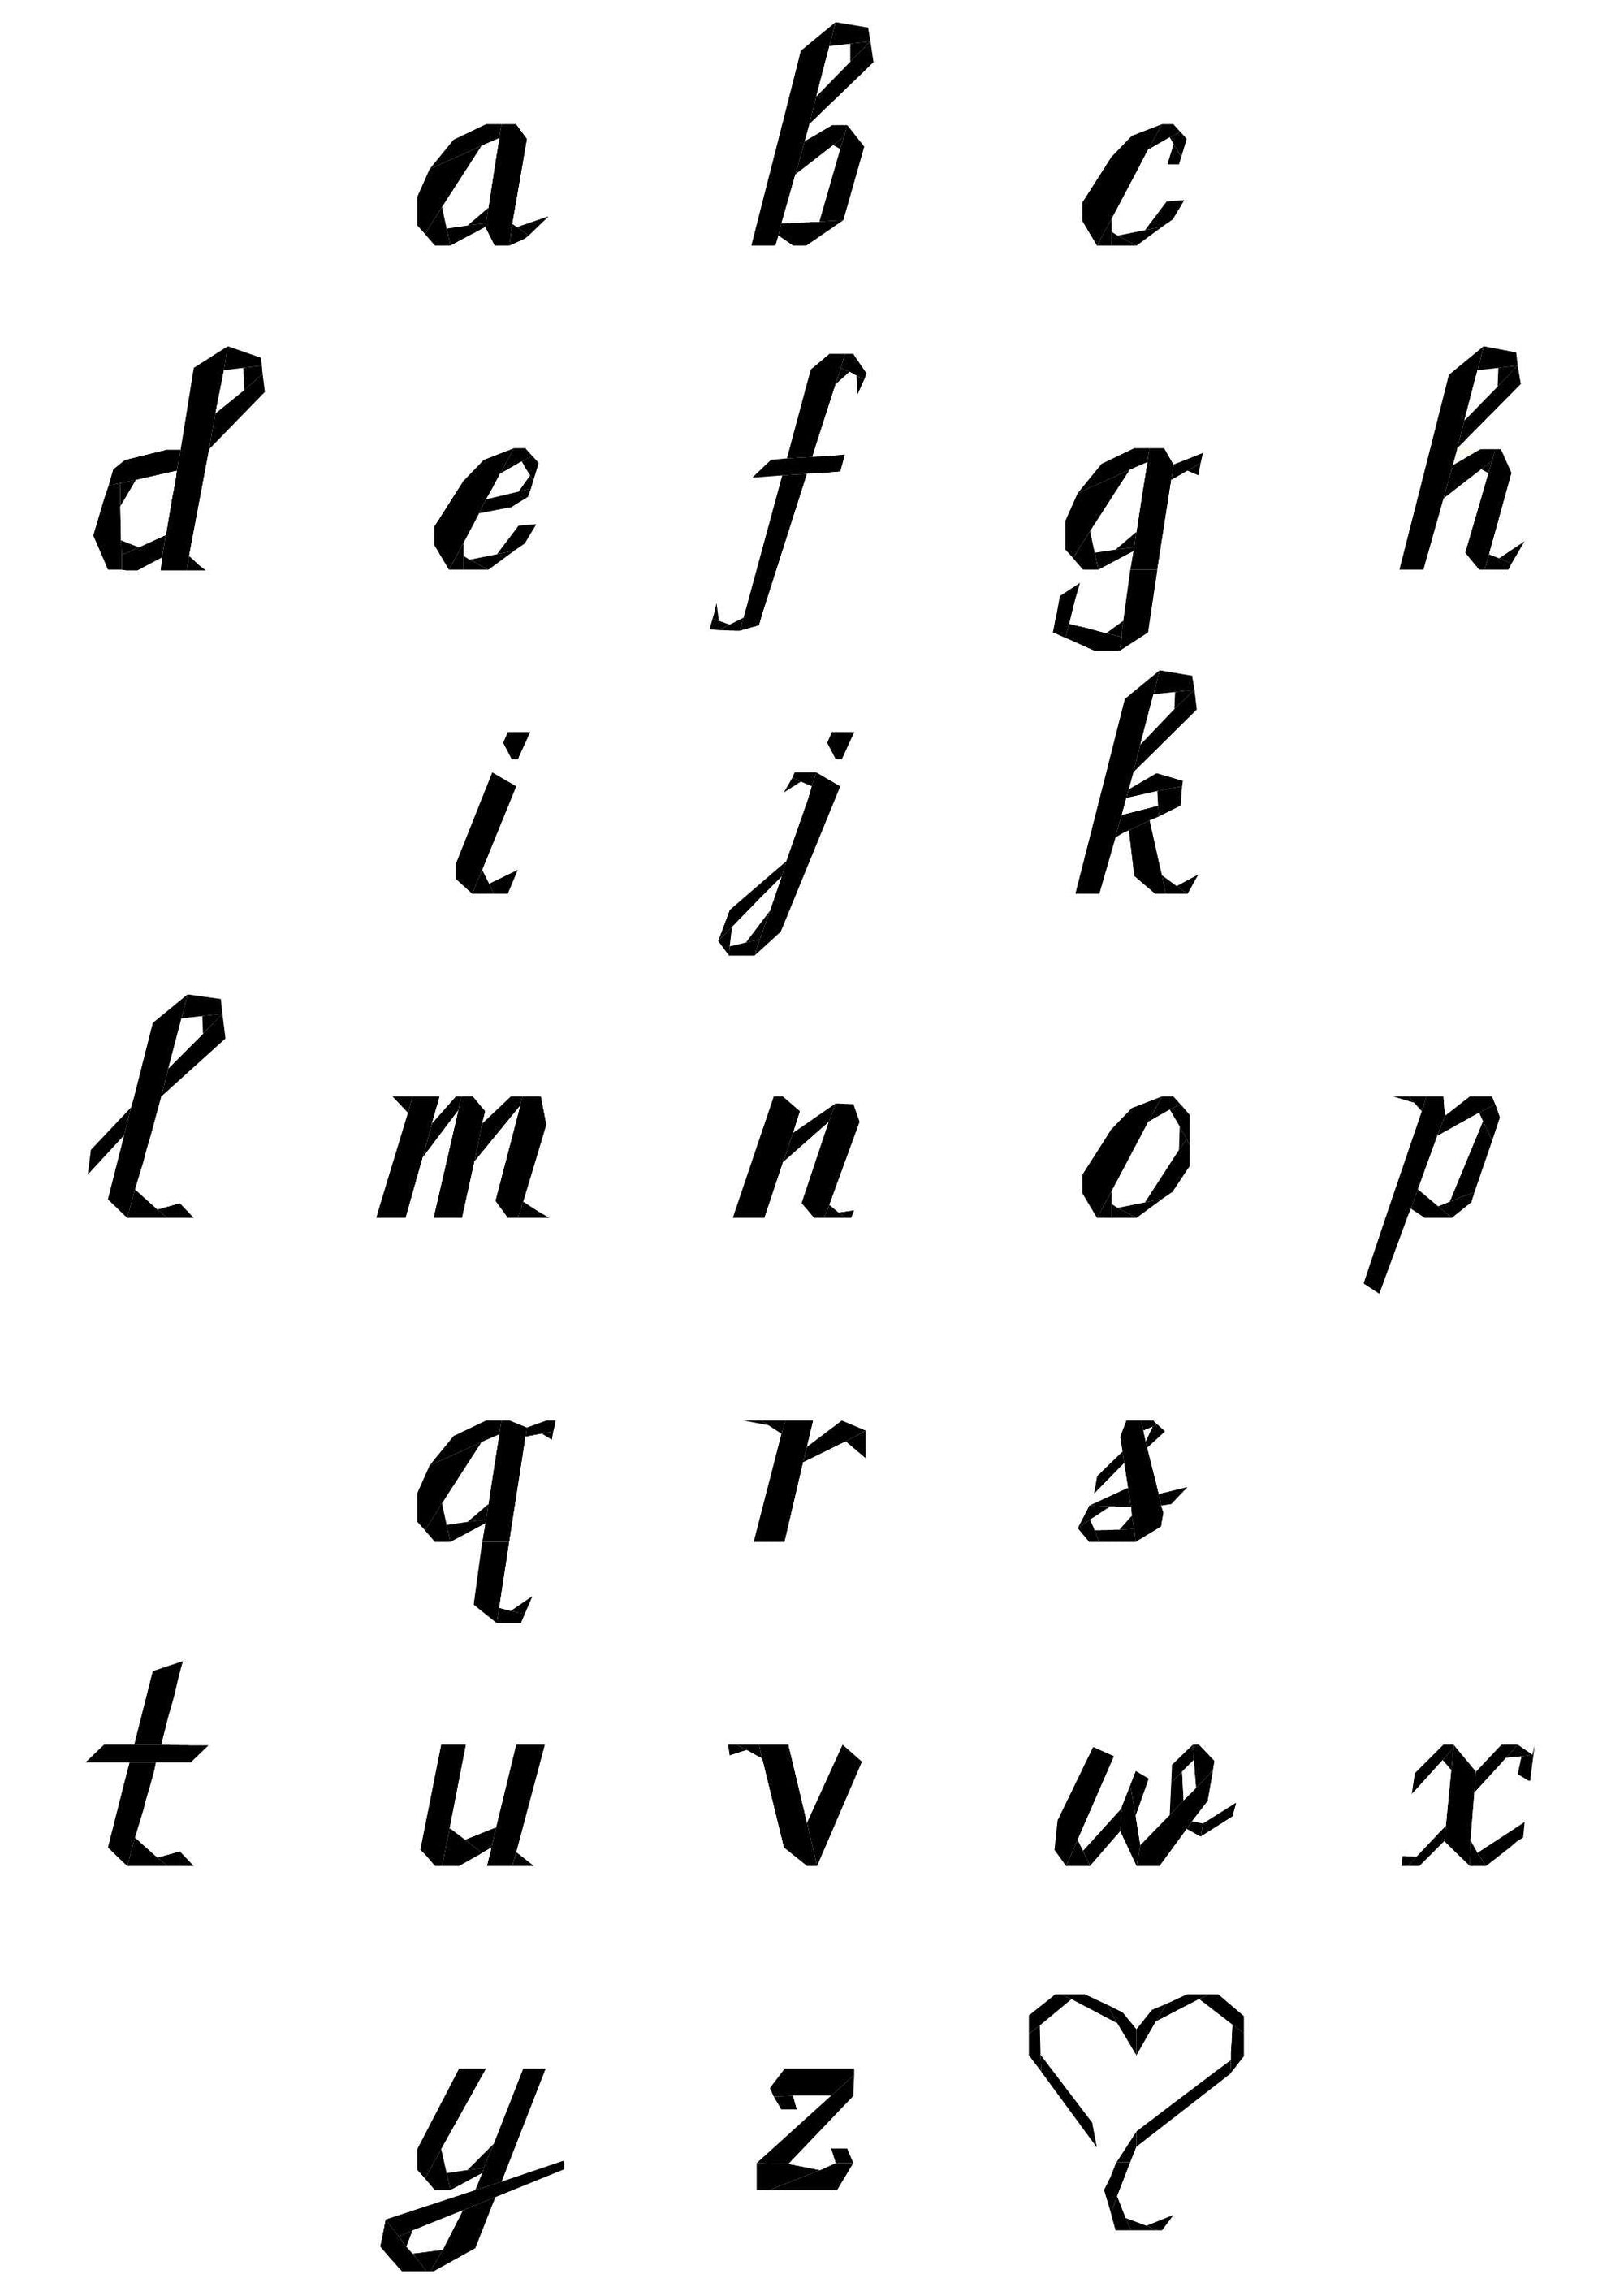 paper pieced alphabet featuring a cursive style script plus a heart pattern